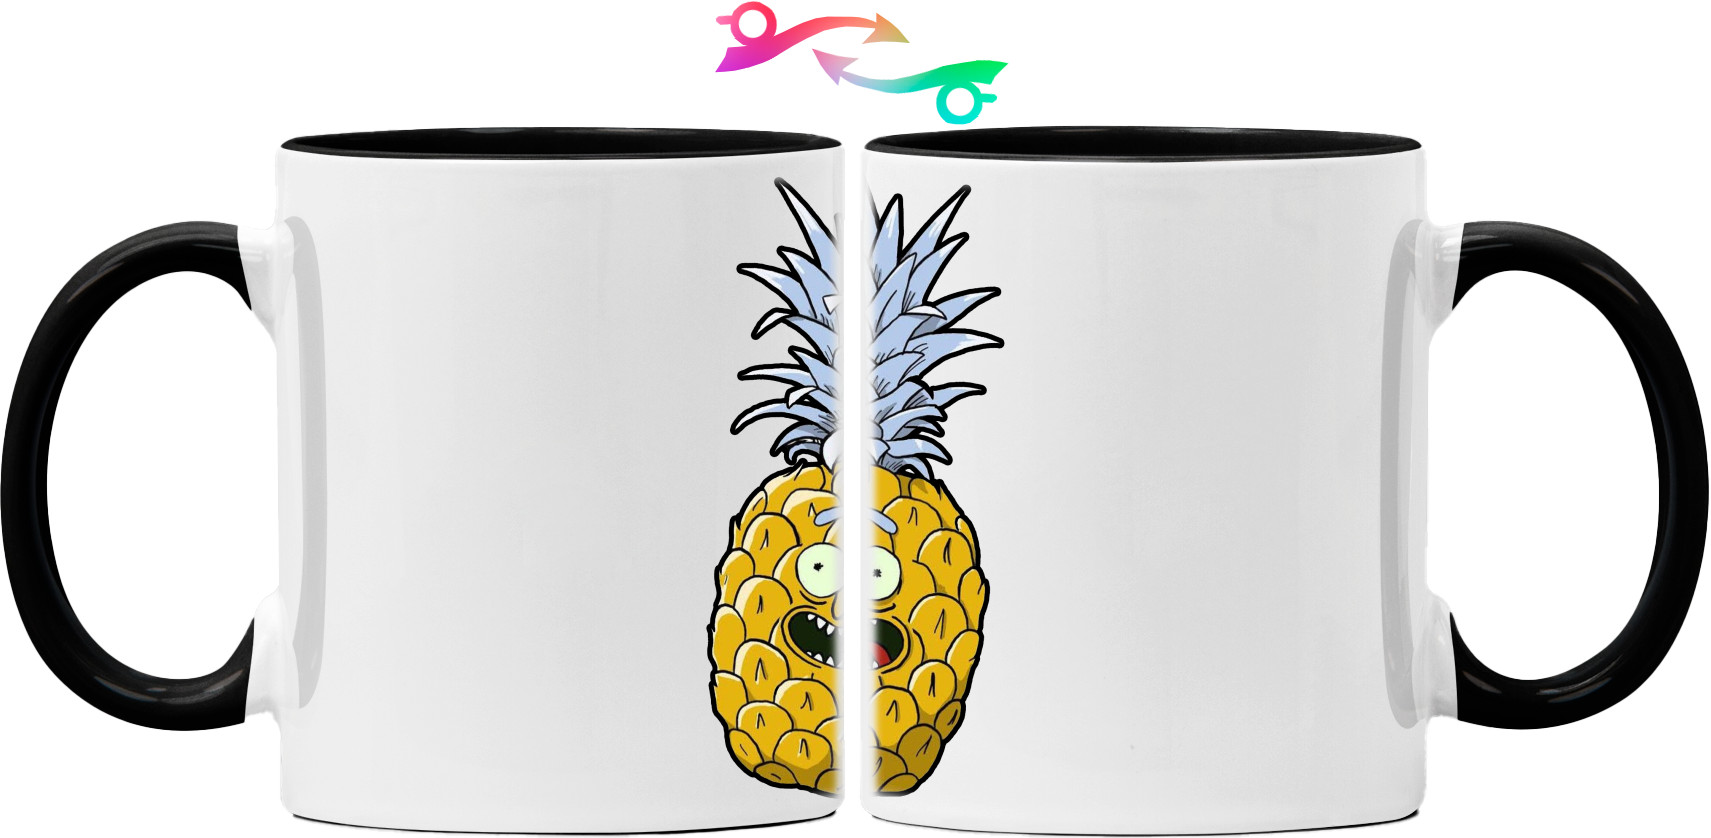 pineapple rick